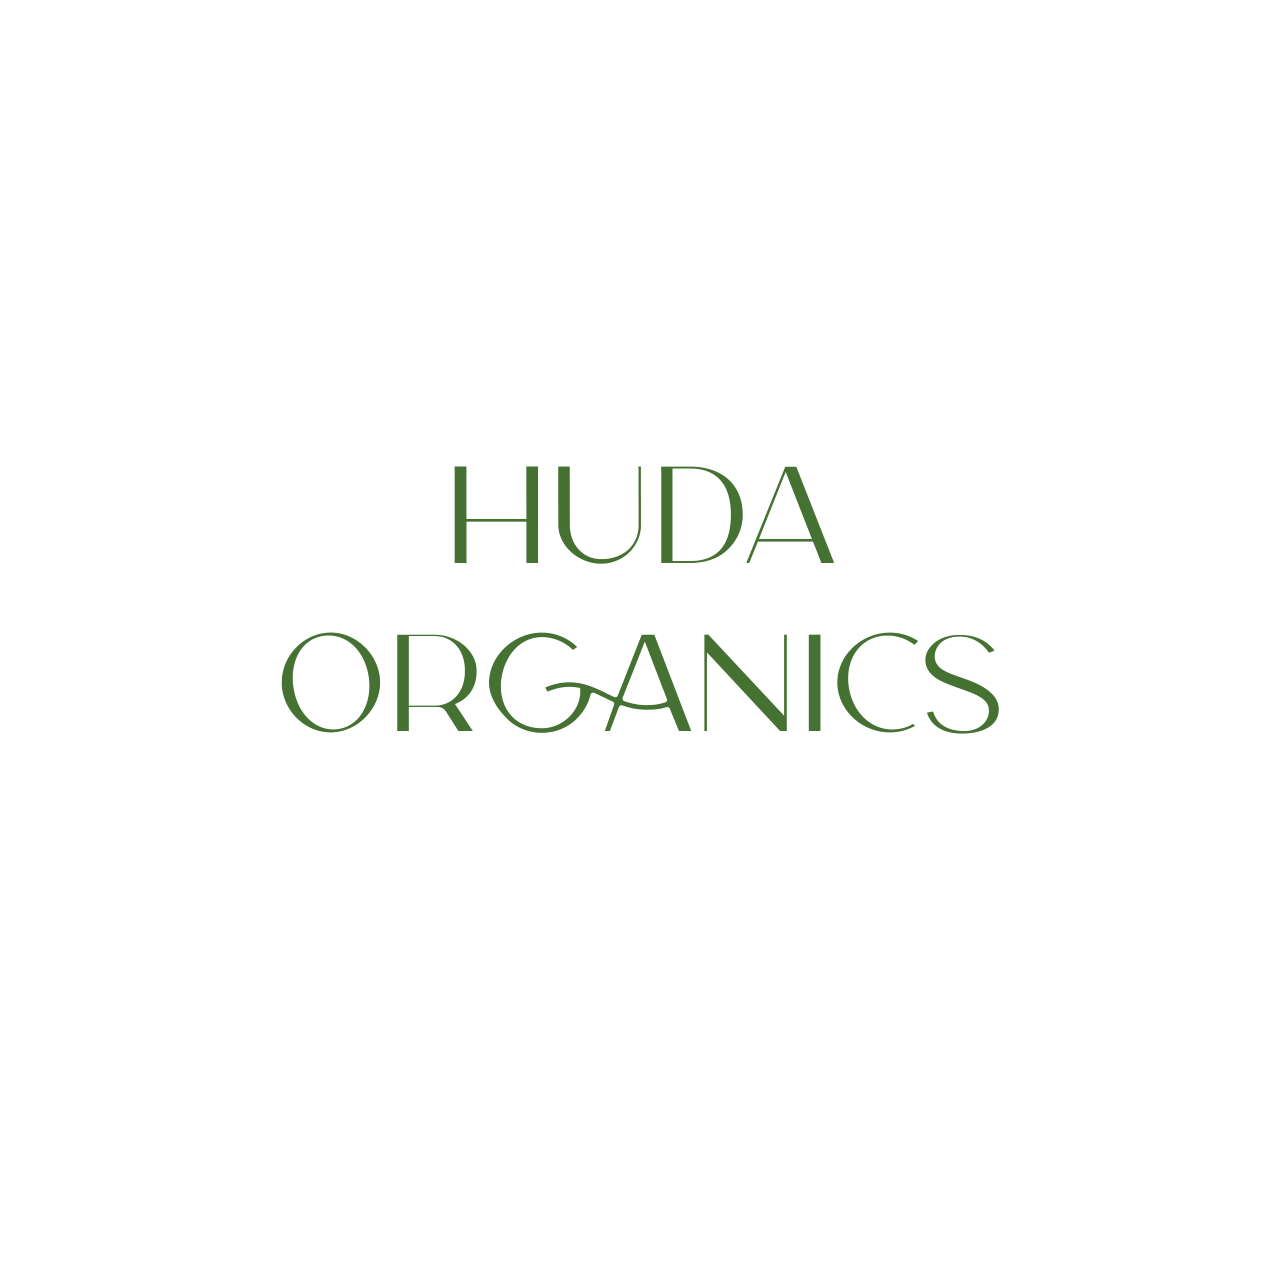 THE FUTURE OF HUDA ORGANICS